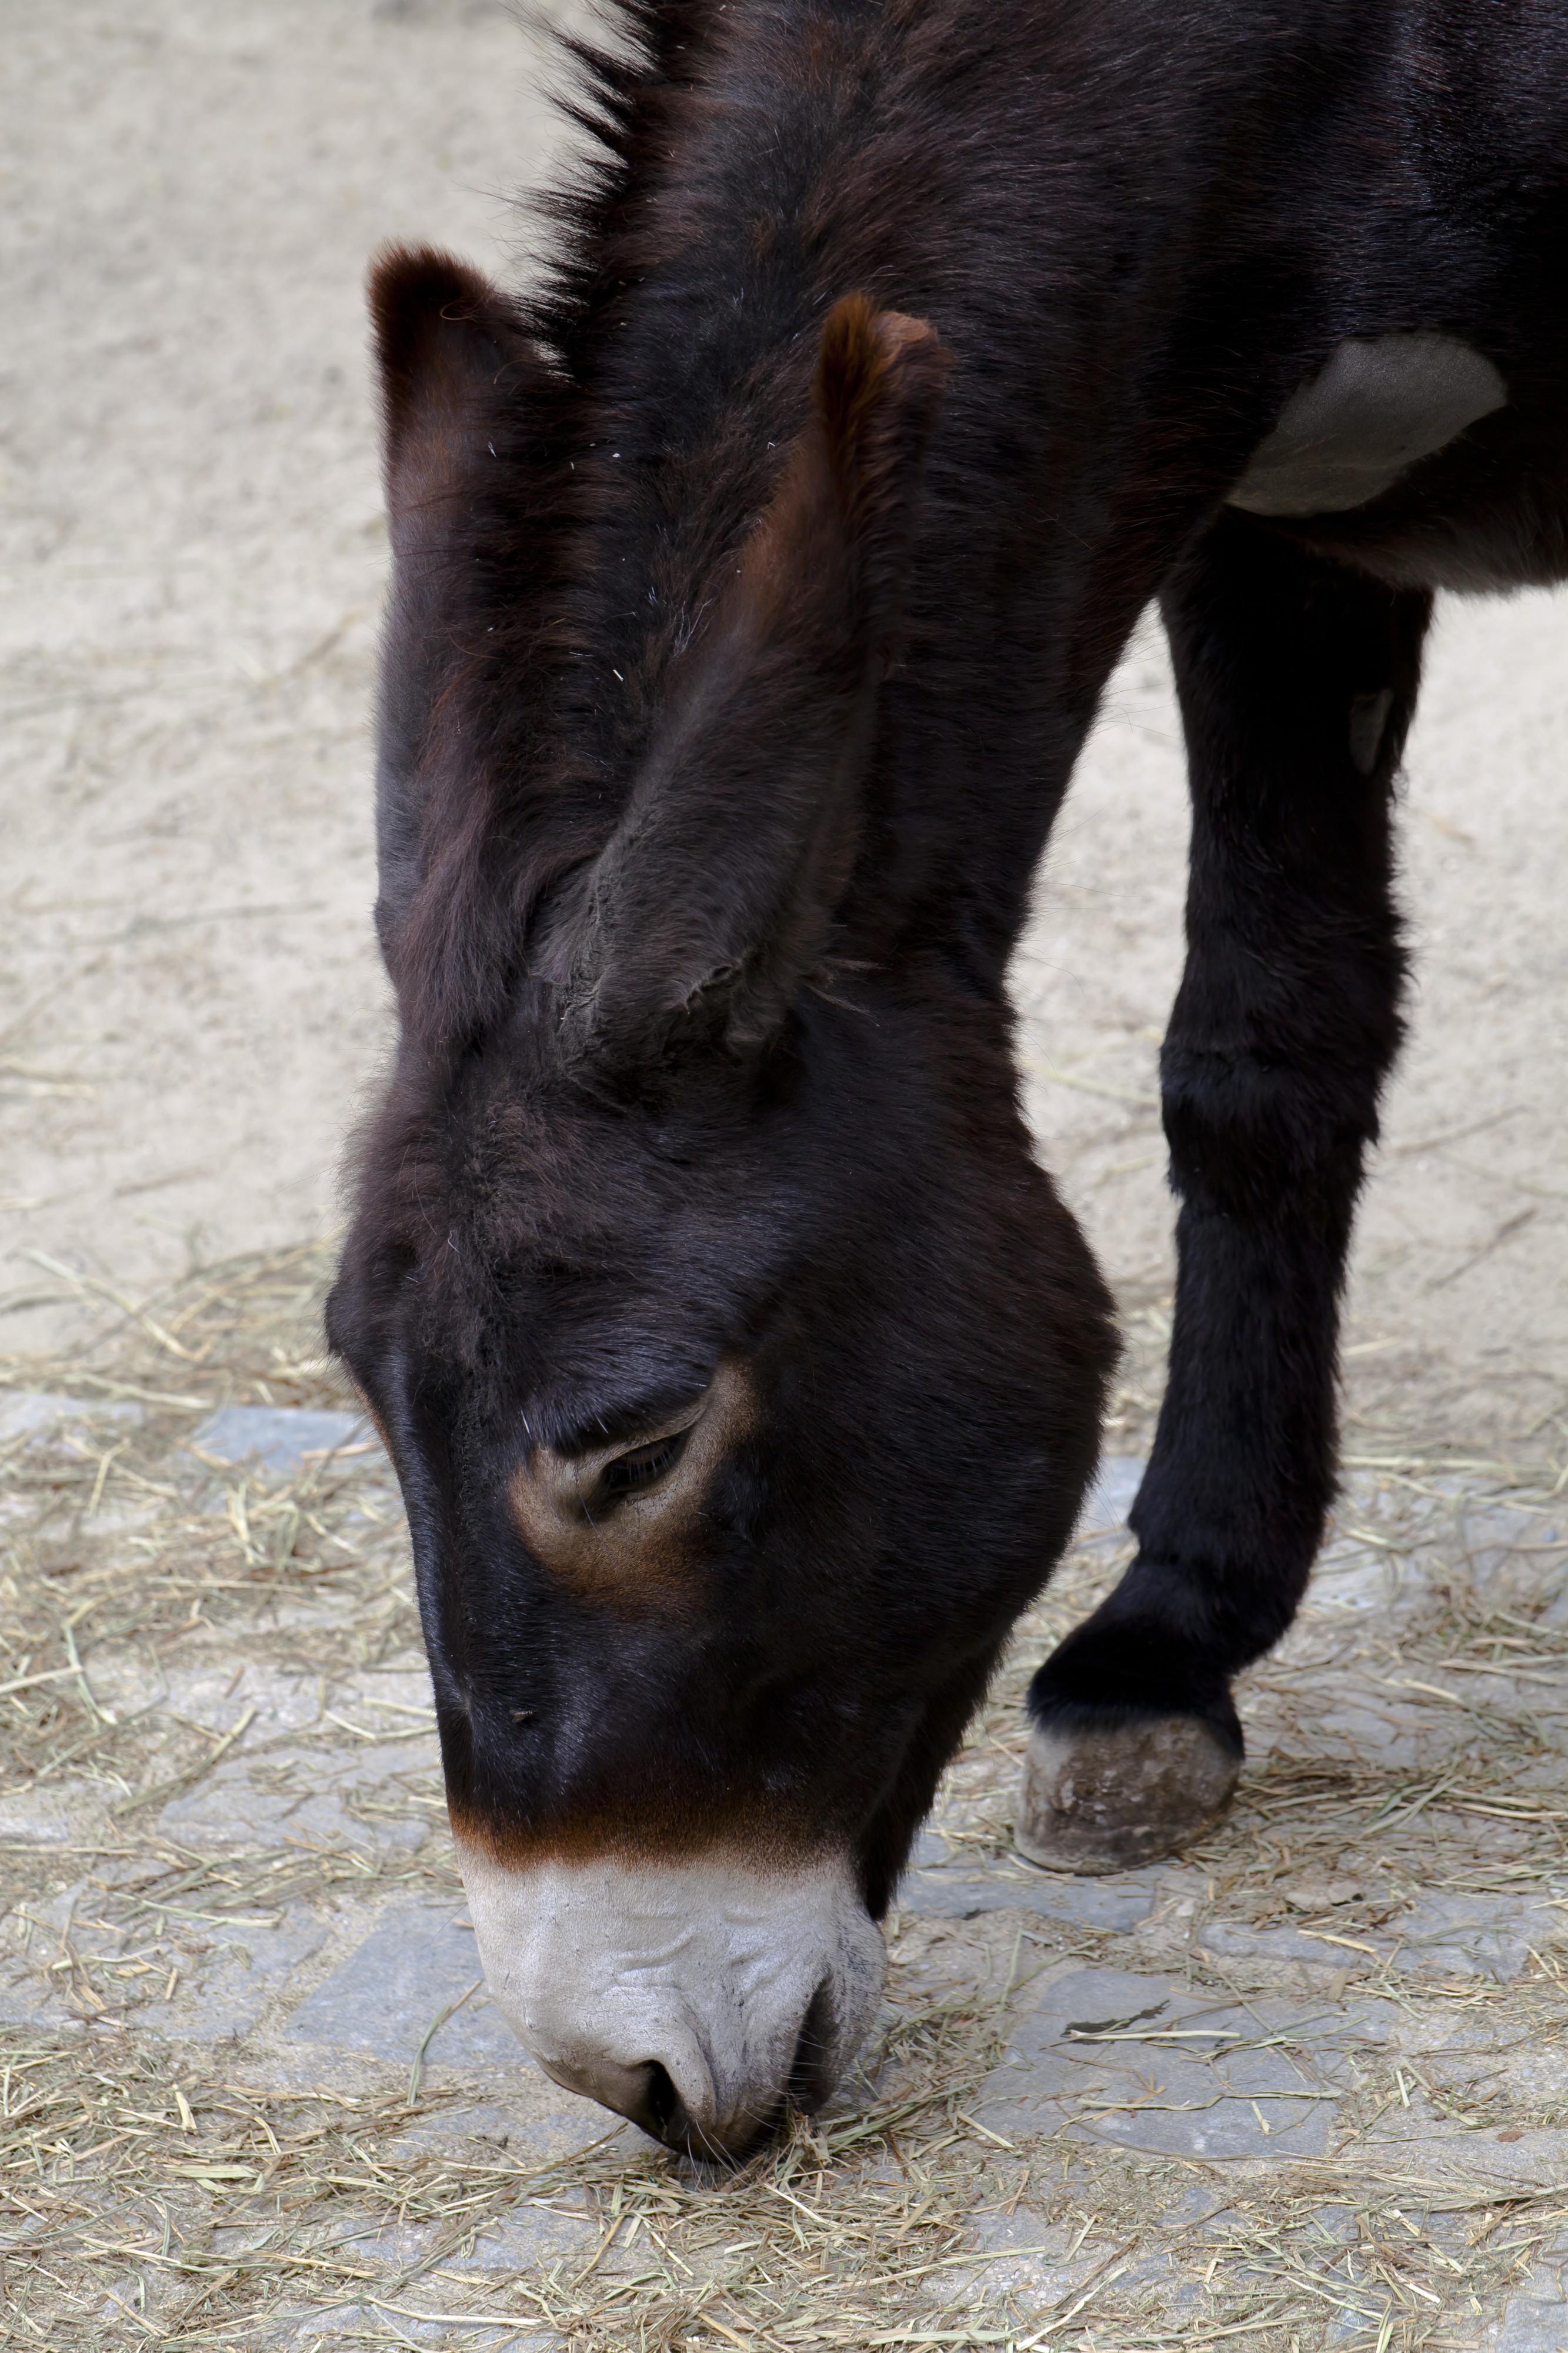 Asno (Equus asinus africanus), Tierpark Hellabrunn, Múnich, Alemania, 2012-06-17, DD 02